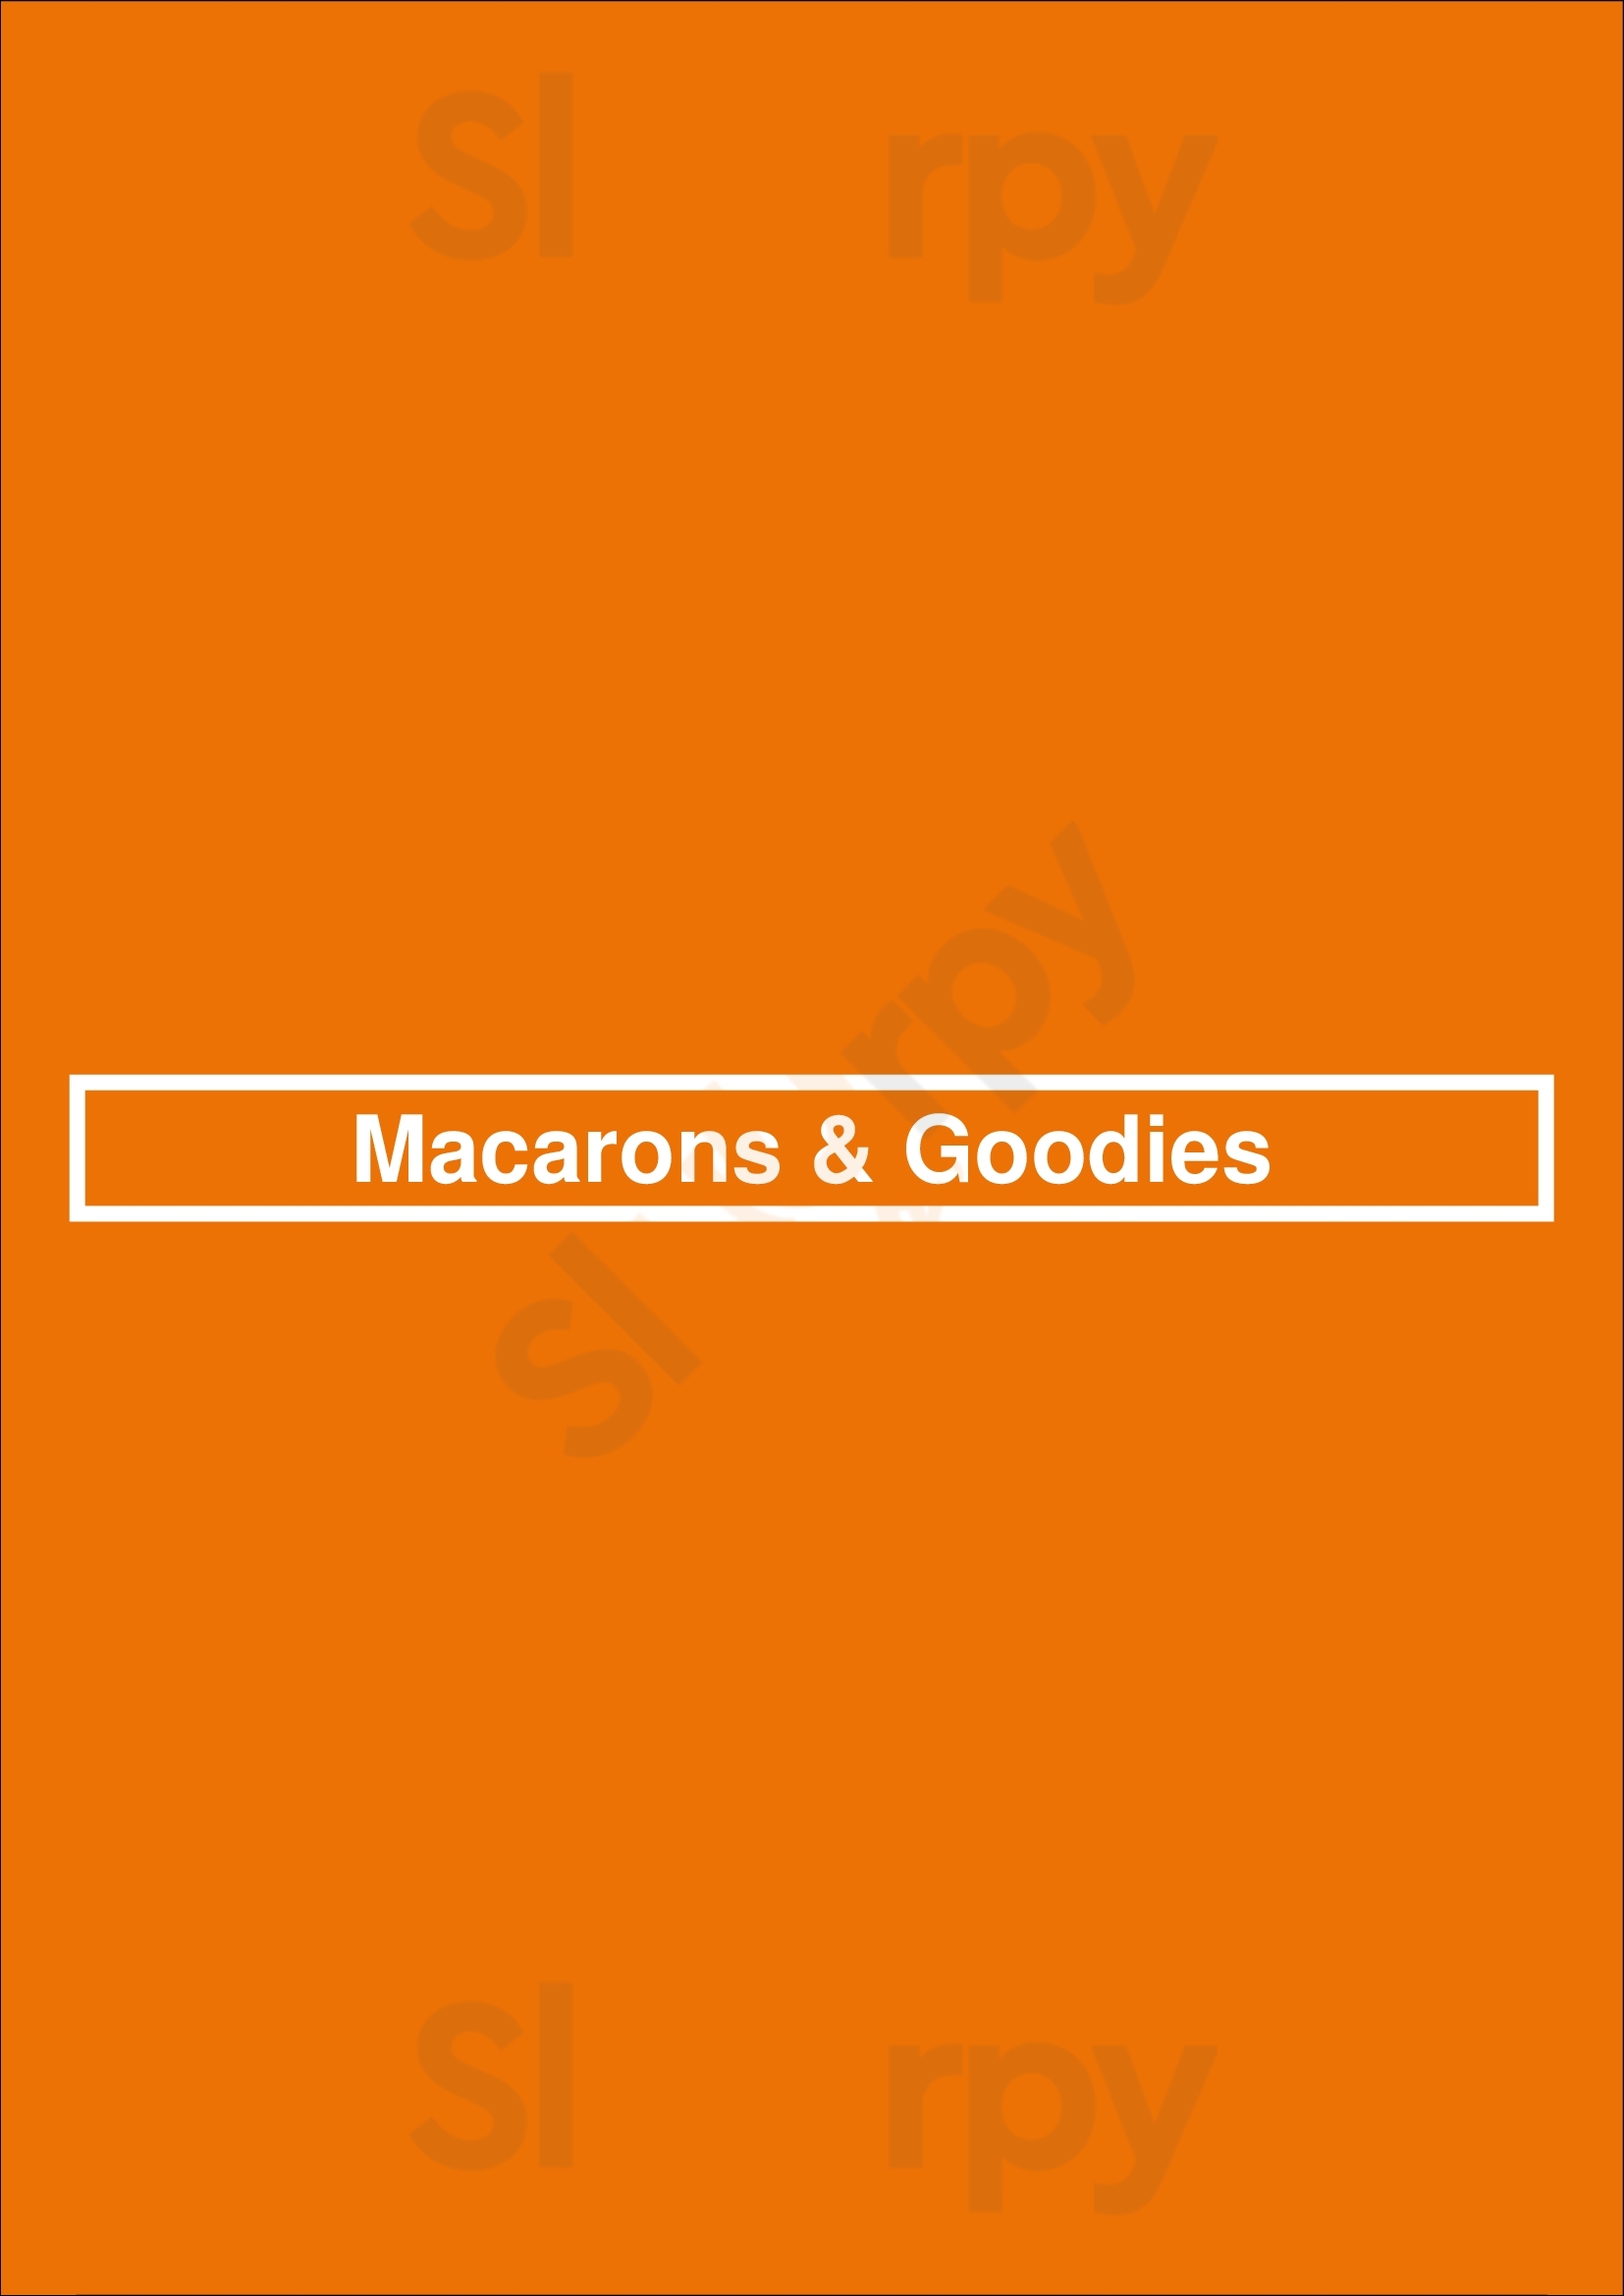 Macarons & Goodies Edmonton Menu - 1